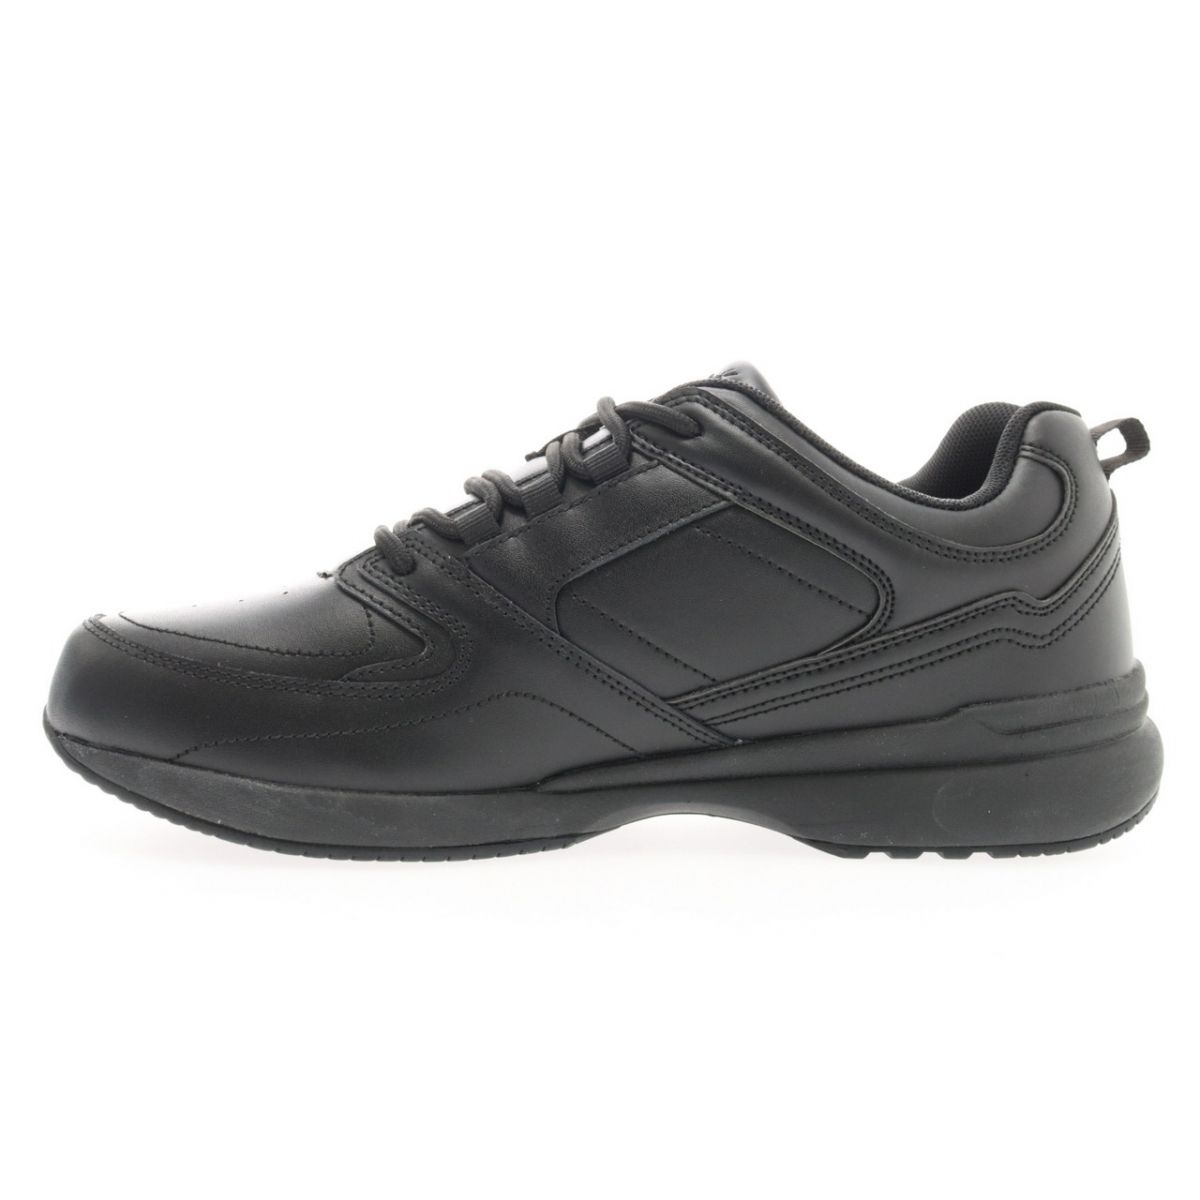 Propet Men's Life Walker Sport Sneaker Black - MAA272LBLK BLACK - BLACK, 11.5